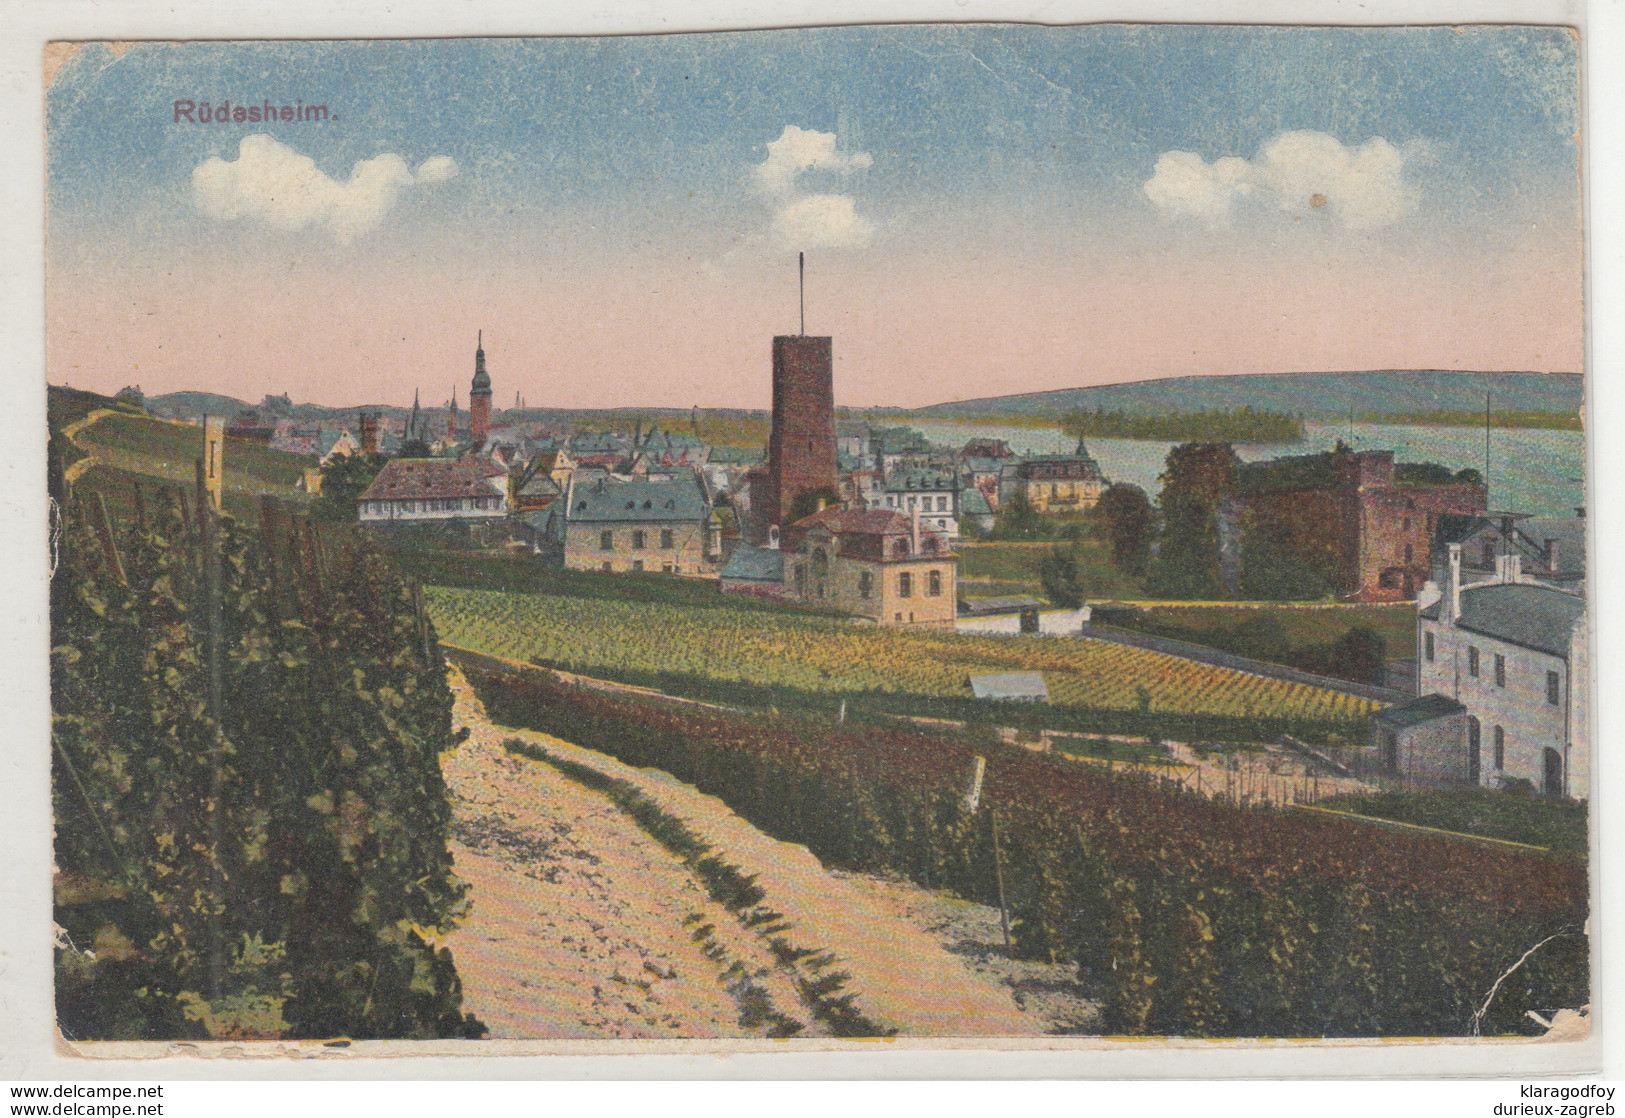 Poste Militarire Balgique Belgie Legerposterij Postmark On Rüdesheim Postcard Travelled 1921 To St. Niklaas B181020 - OC38/54 Belgian Occupation In Germany